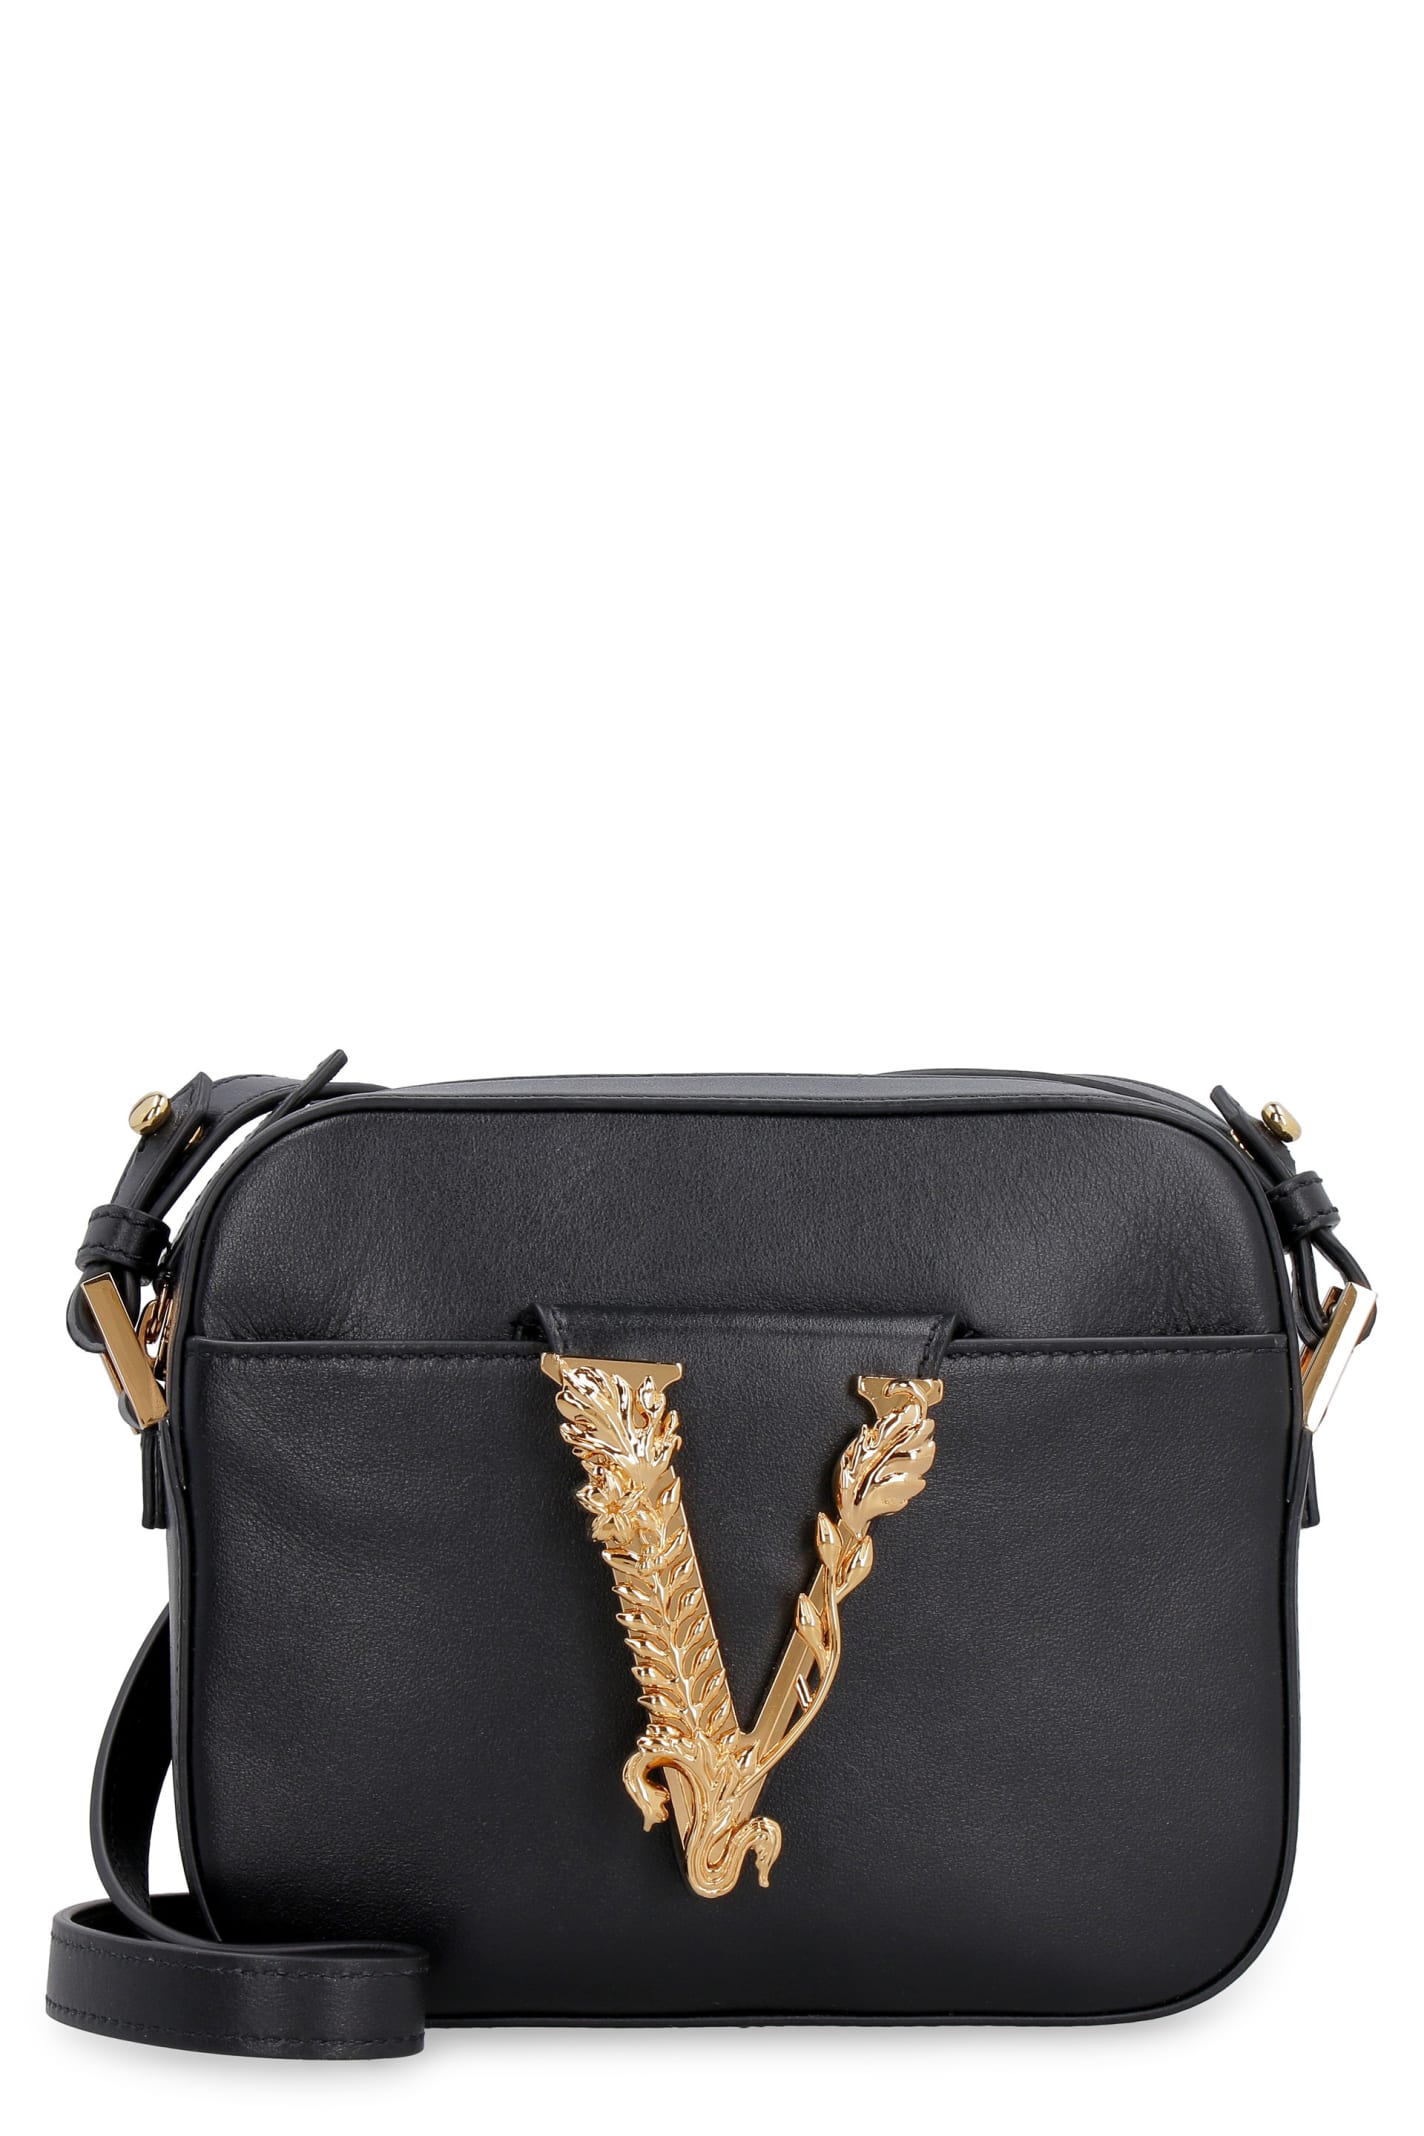 Versace Virtus Leather Mini Crossbody Bag